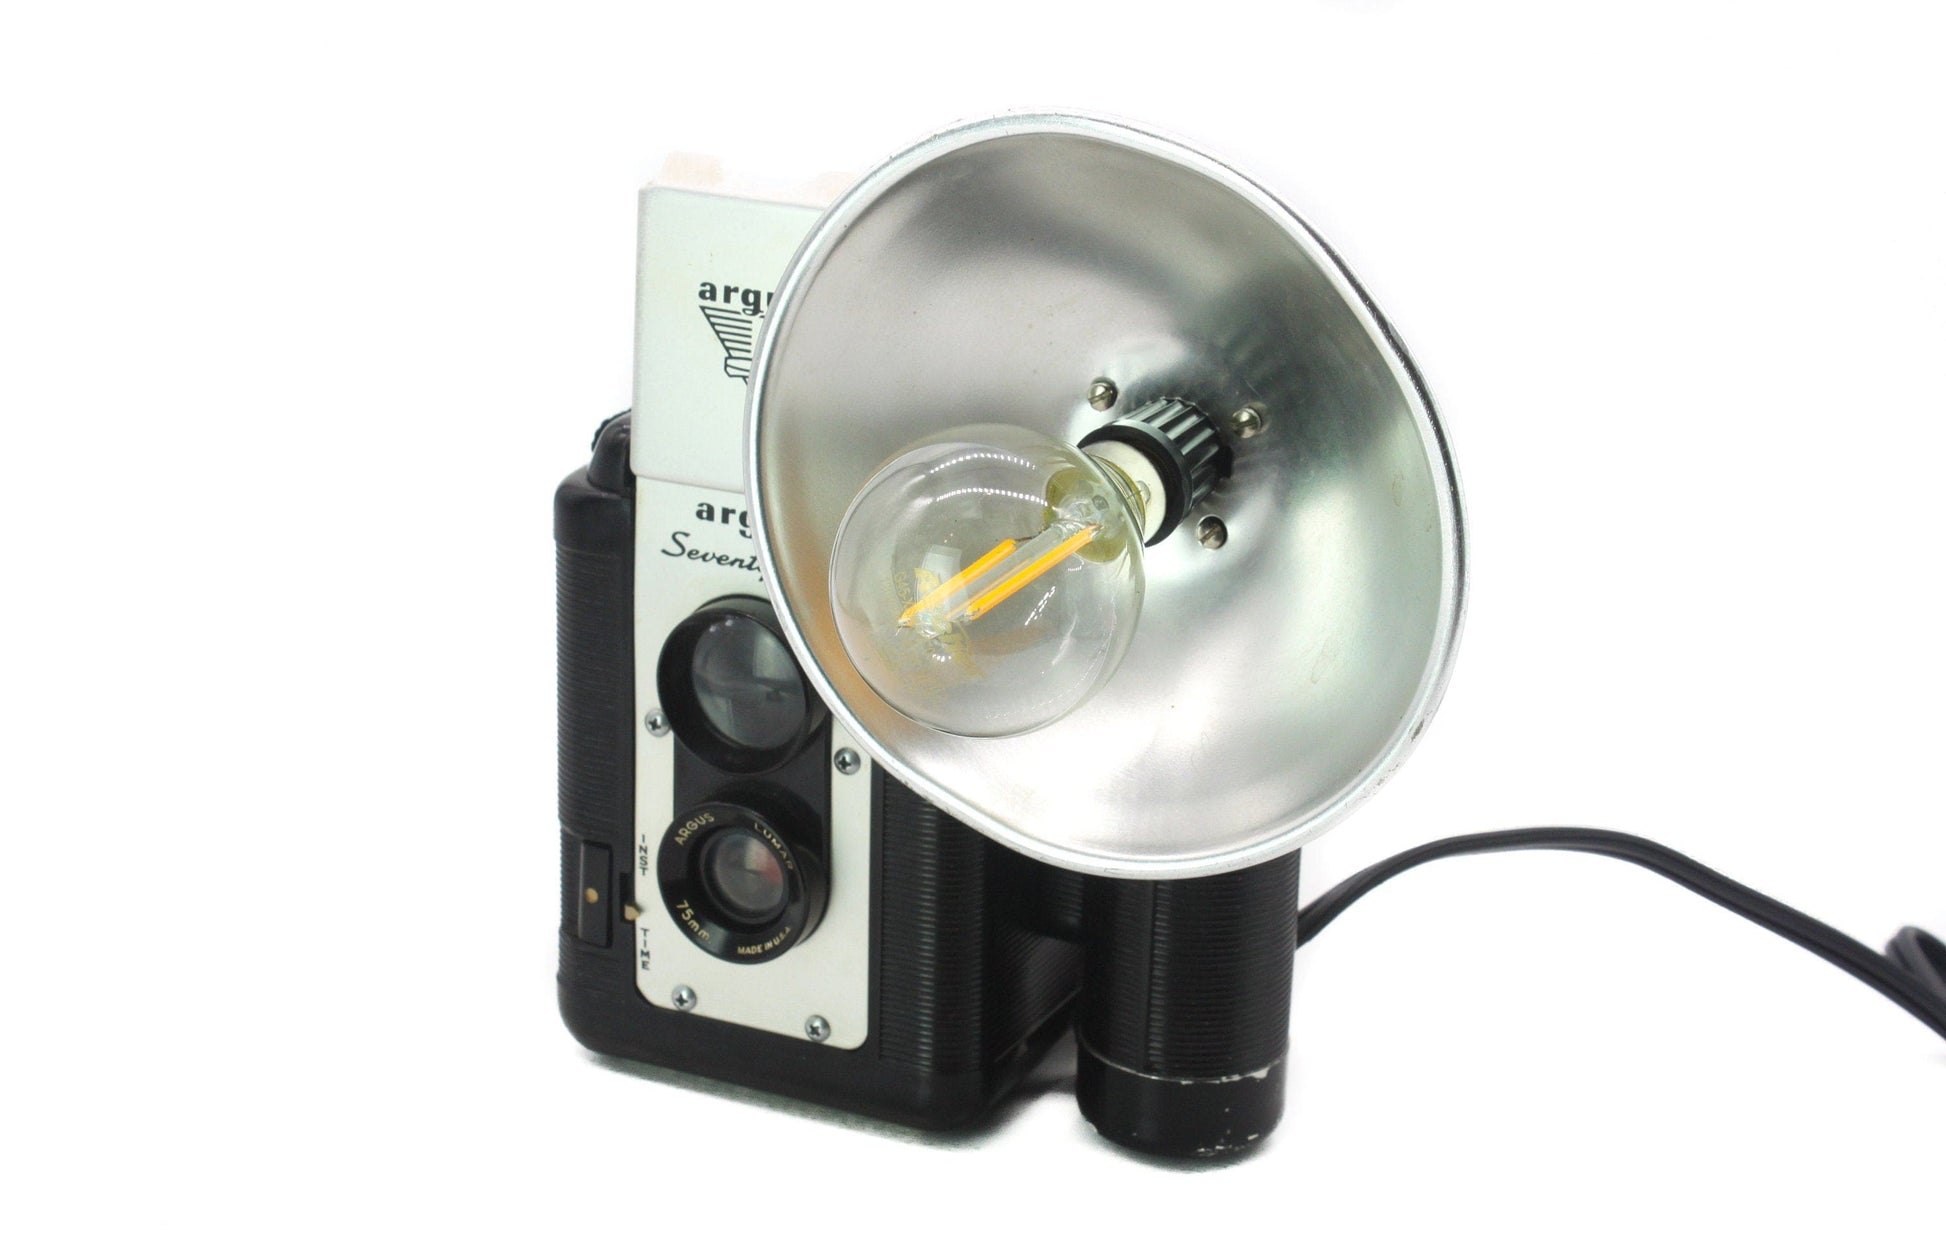 LightAndTimeArt Camera Lamp LED Reading Lamp, Desk Lamp, Argus Argoflex Seventy-Five Camera, 50' table lamp, task lamp, mid-century light, movie room lamp